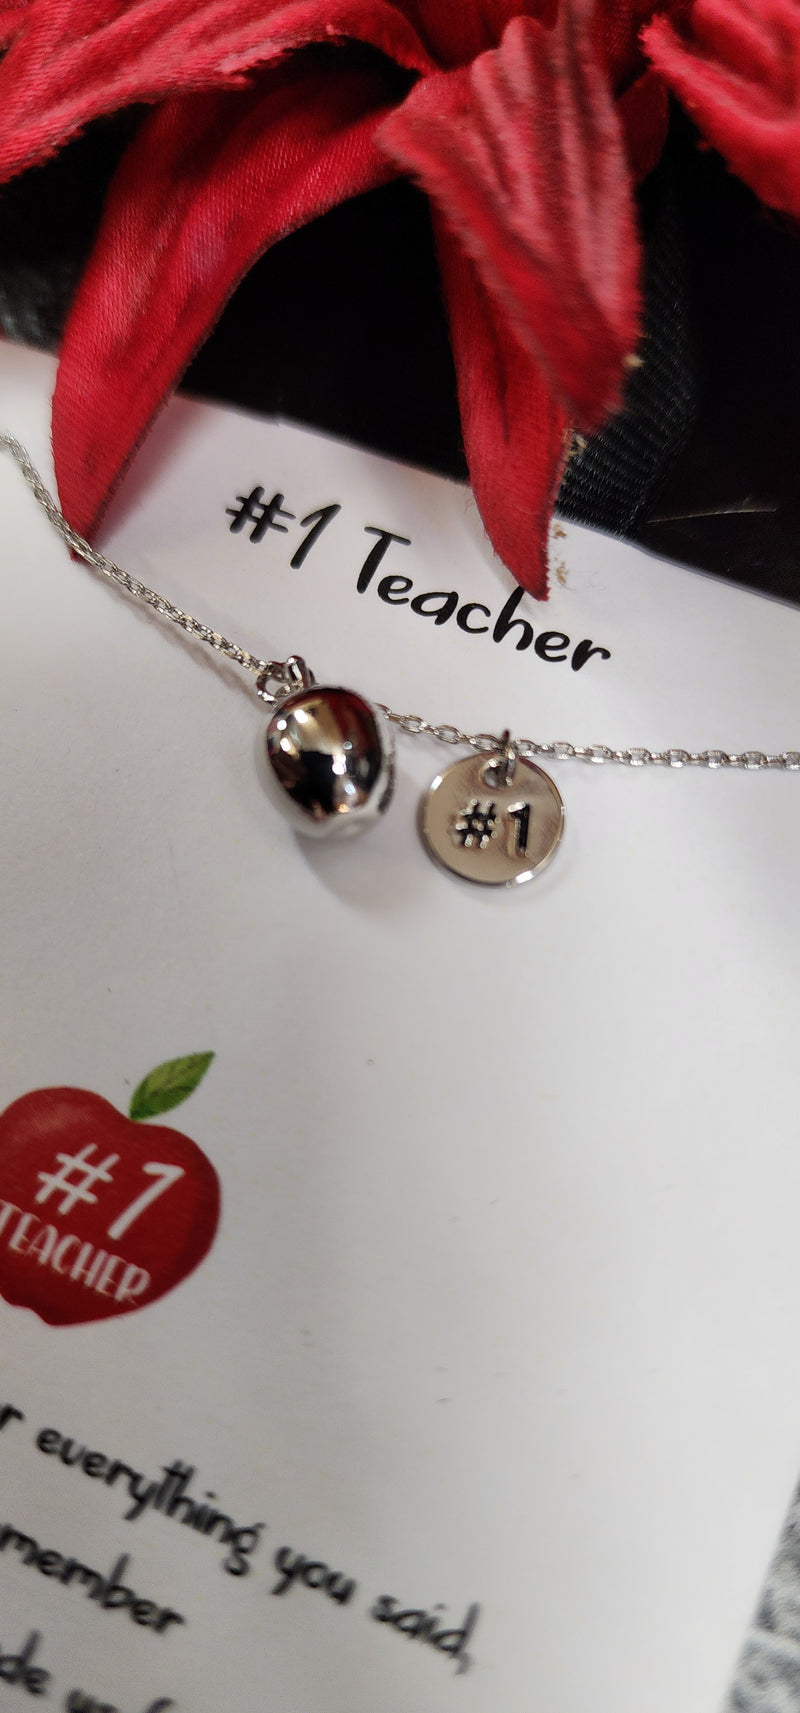 #1 Teacher Necklace